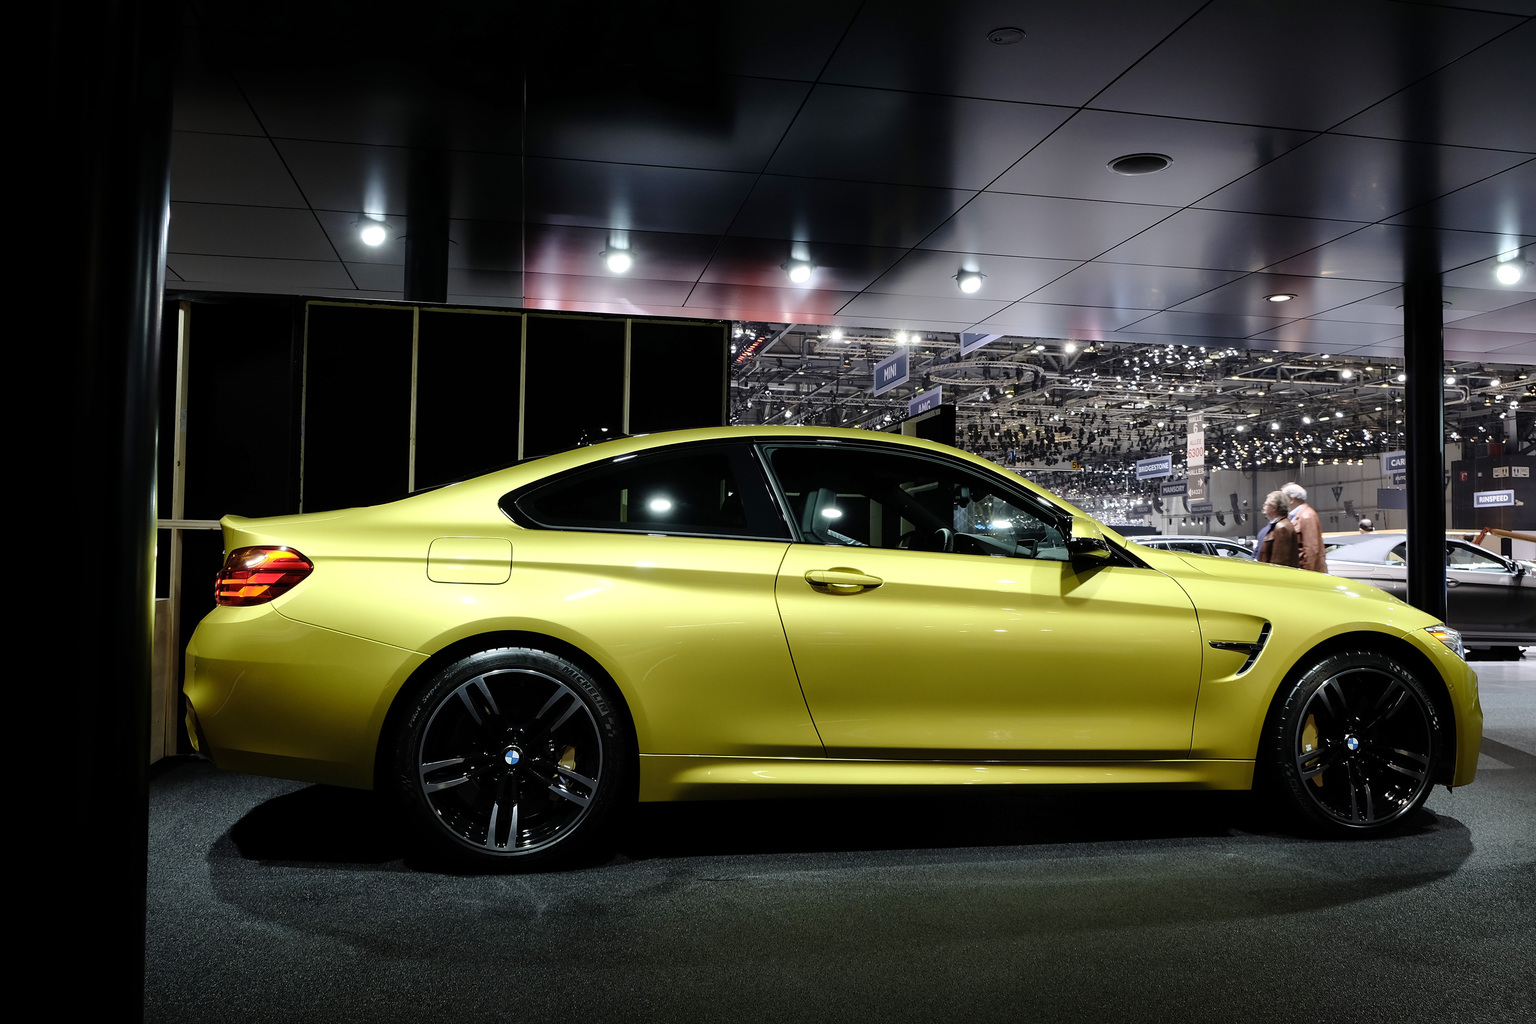 2014 BMW M4 Gallery